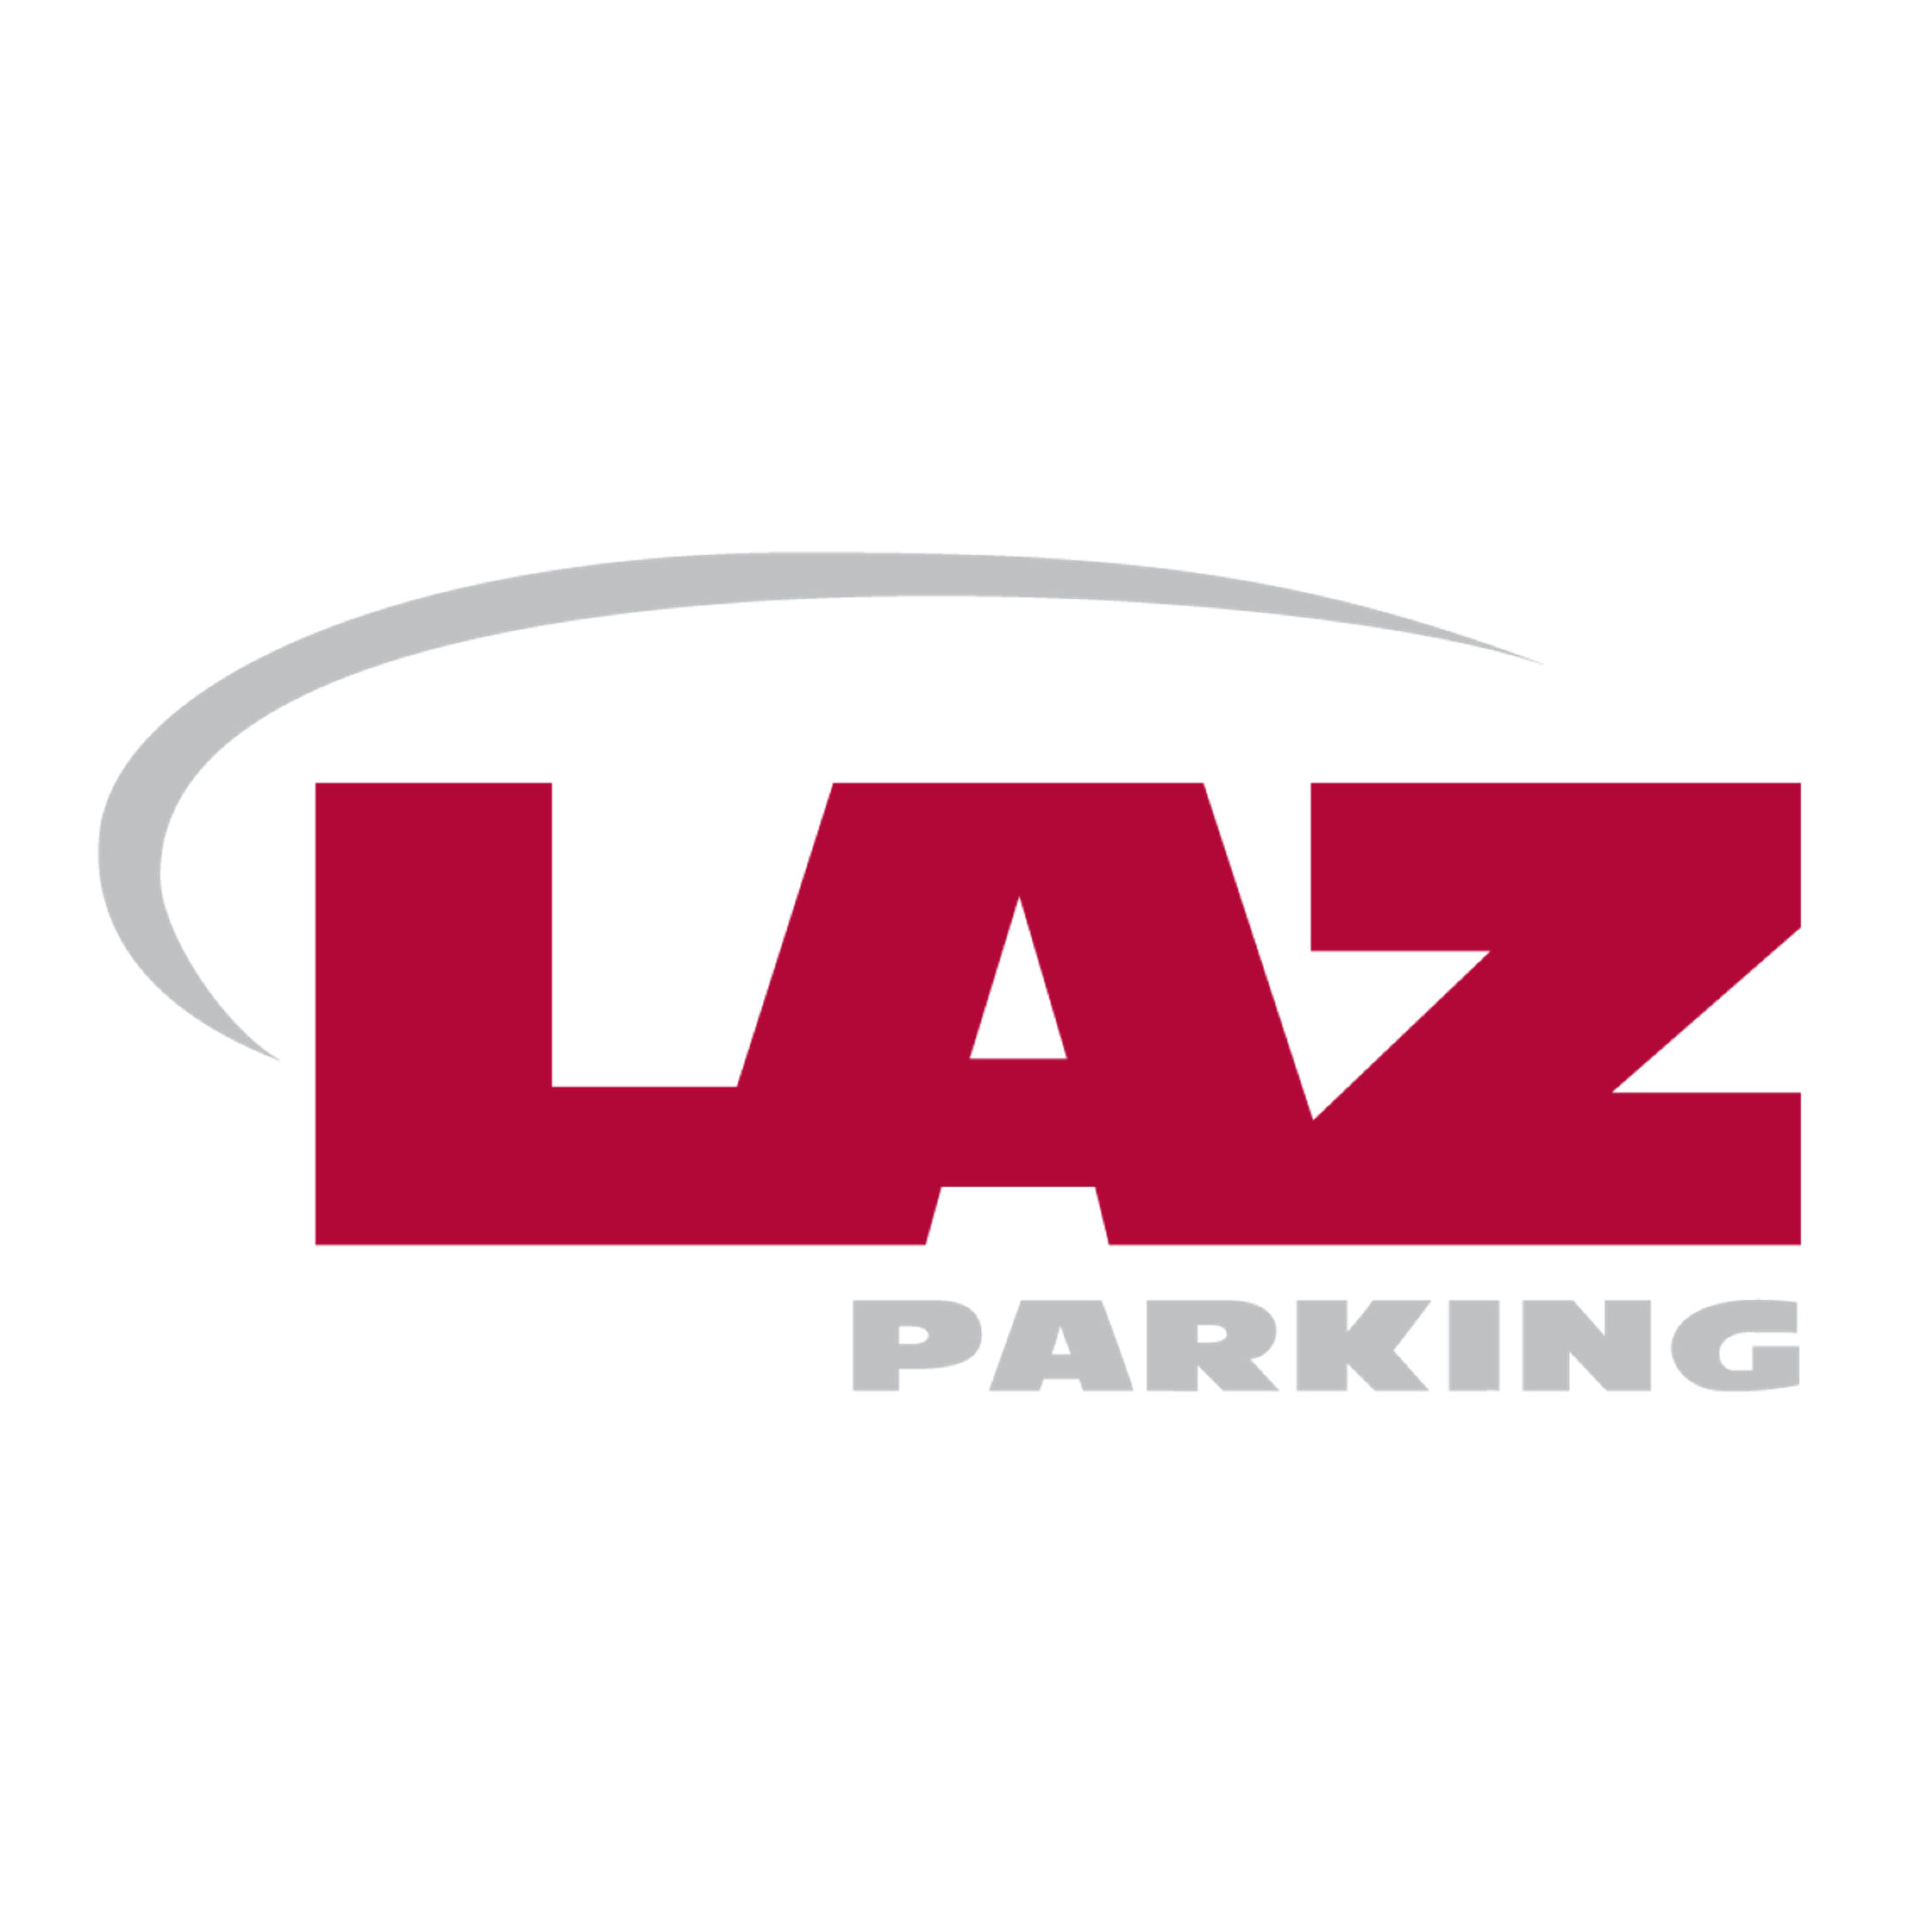 LAZ Parking Indianapolis (317)638-5805